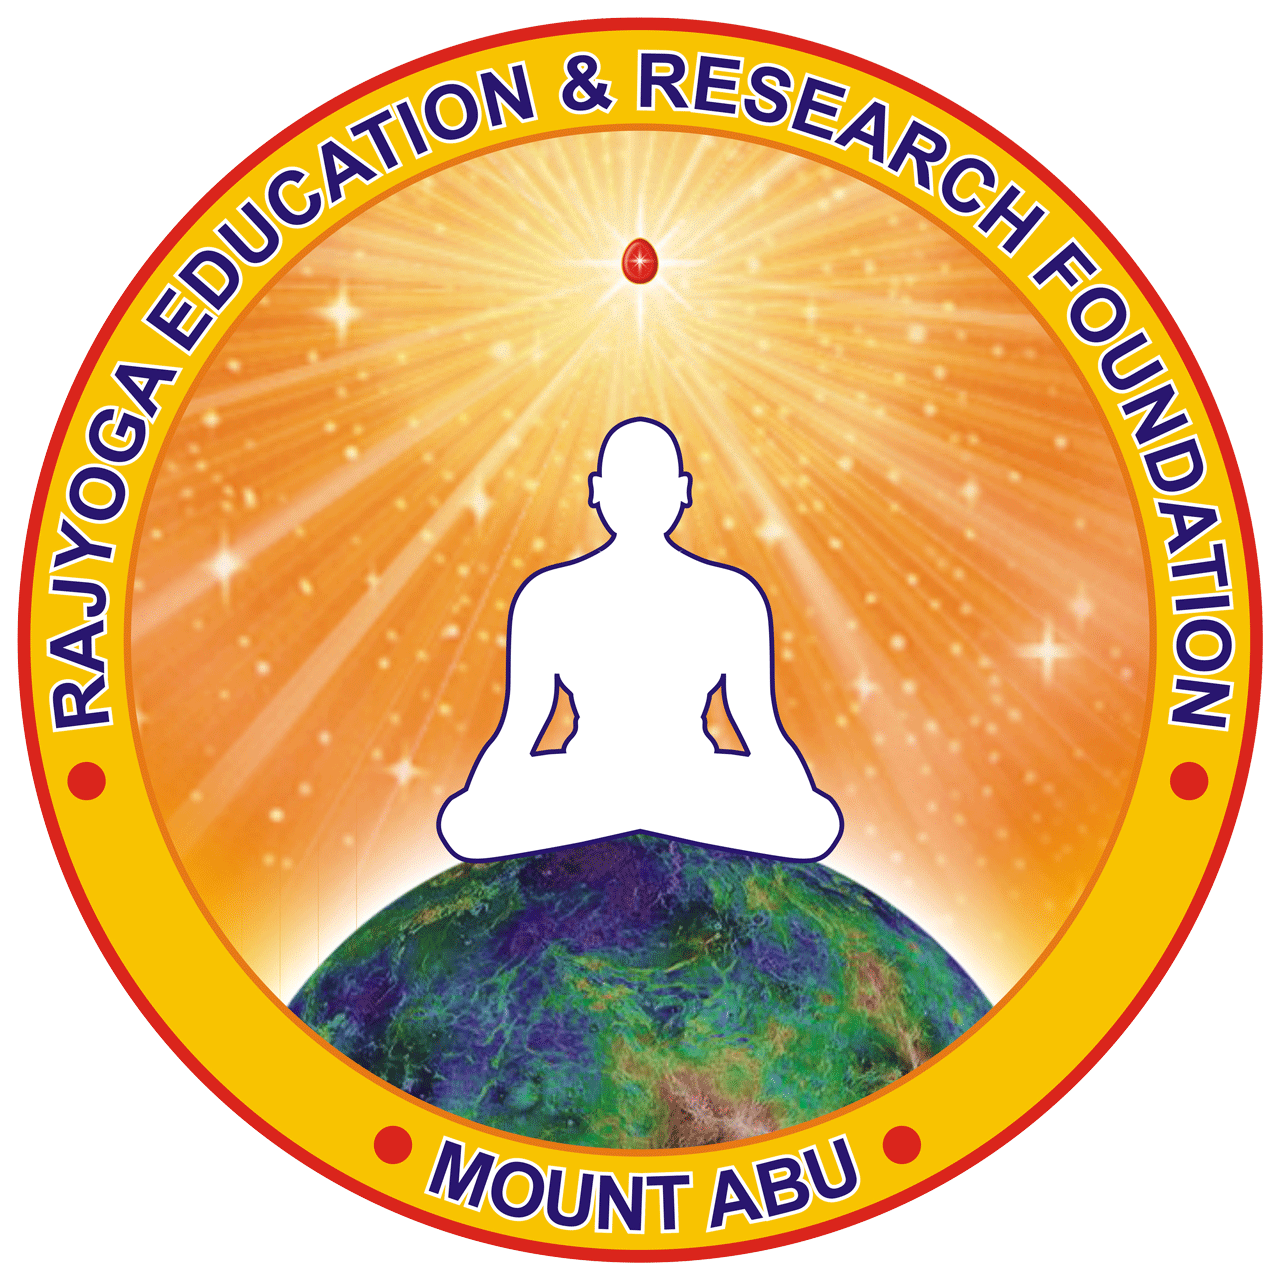 Rajyoga education & Research Foundation